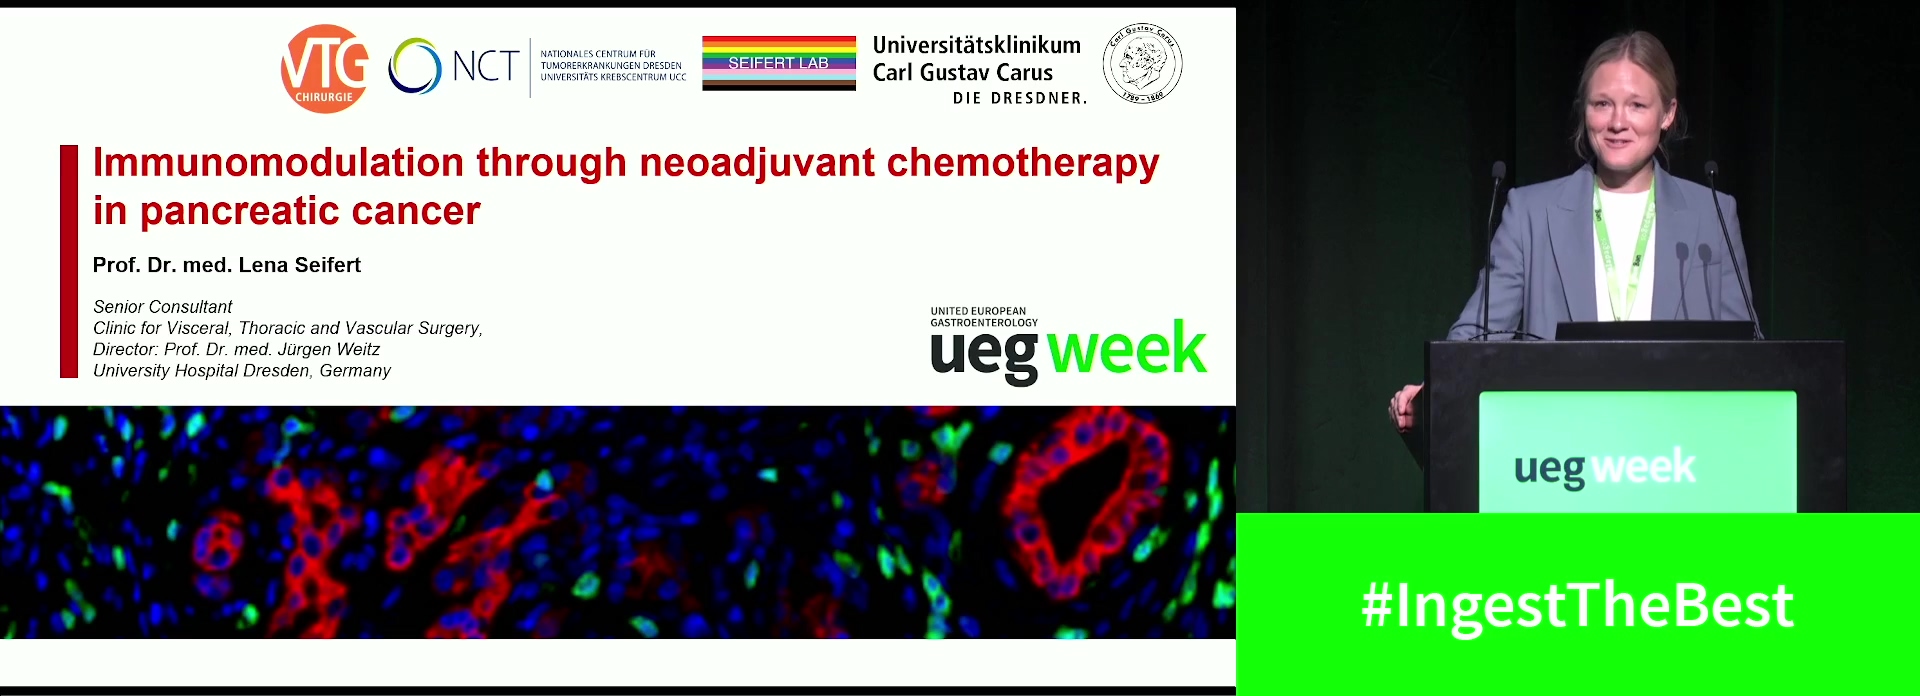 Immunomodulation through neoadjuvant chemotherapy in pancreatic cancer